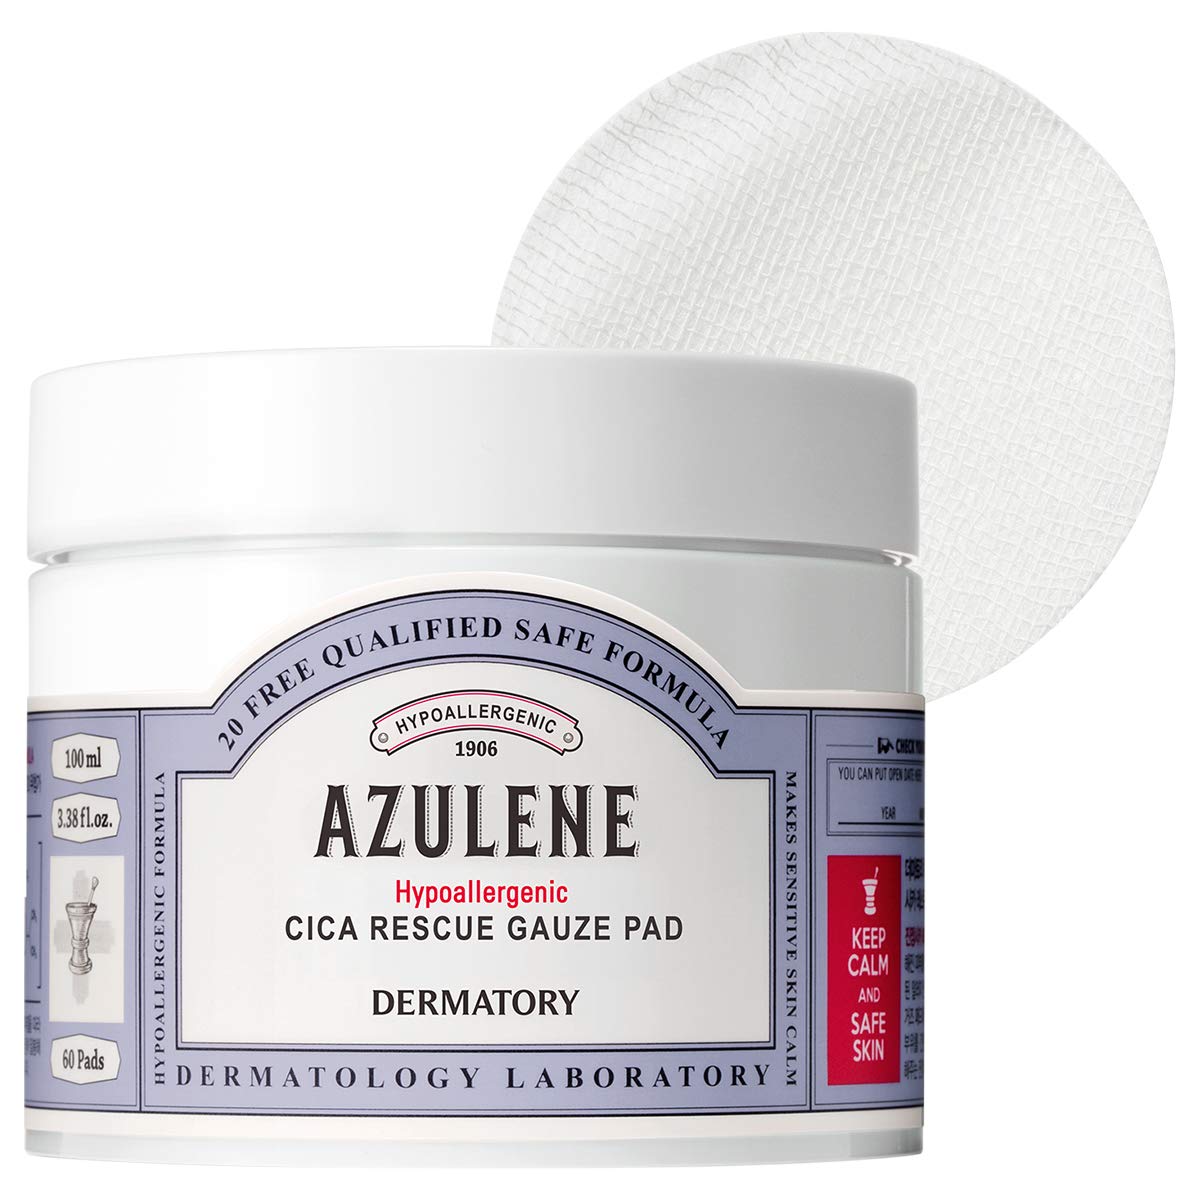 Mua Dermatory Azulene Hypoallergenic CICA Rescue Gauze Pad for Irritated Skin | Moisturizing, Skin-Relief, Free of 98 Allergens, Fragrance Free, Hypoallergenic Tested, Dermatologist Tested (60 Pads) trên Amazon Mỹ chính hãng 2022 | Fado